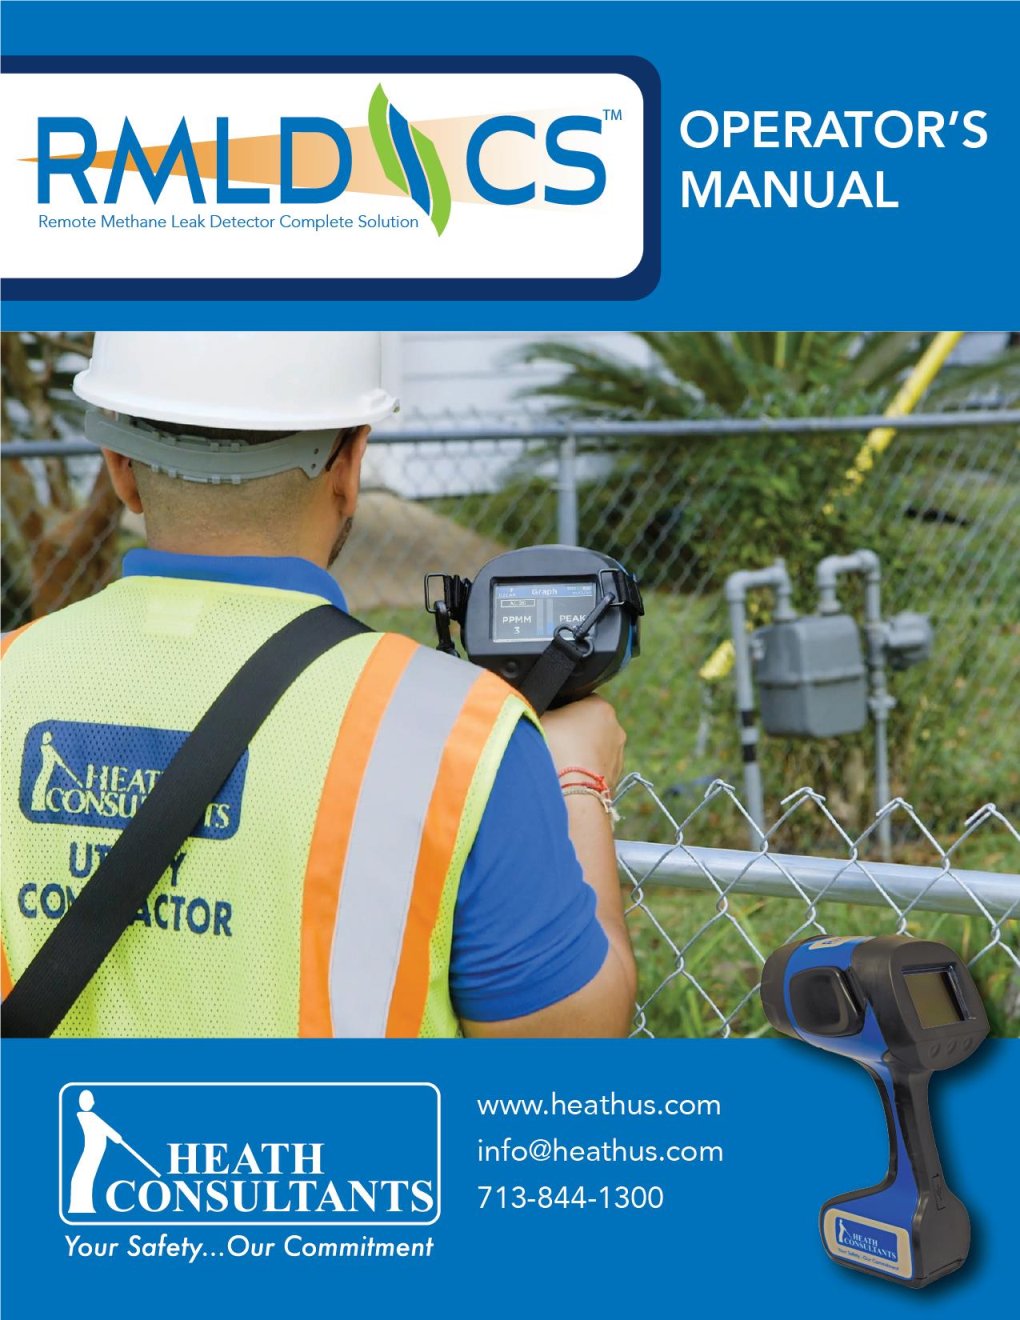 RMLD-CS Operator Manual 2 © 2021 Heath Consultants Incorporated